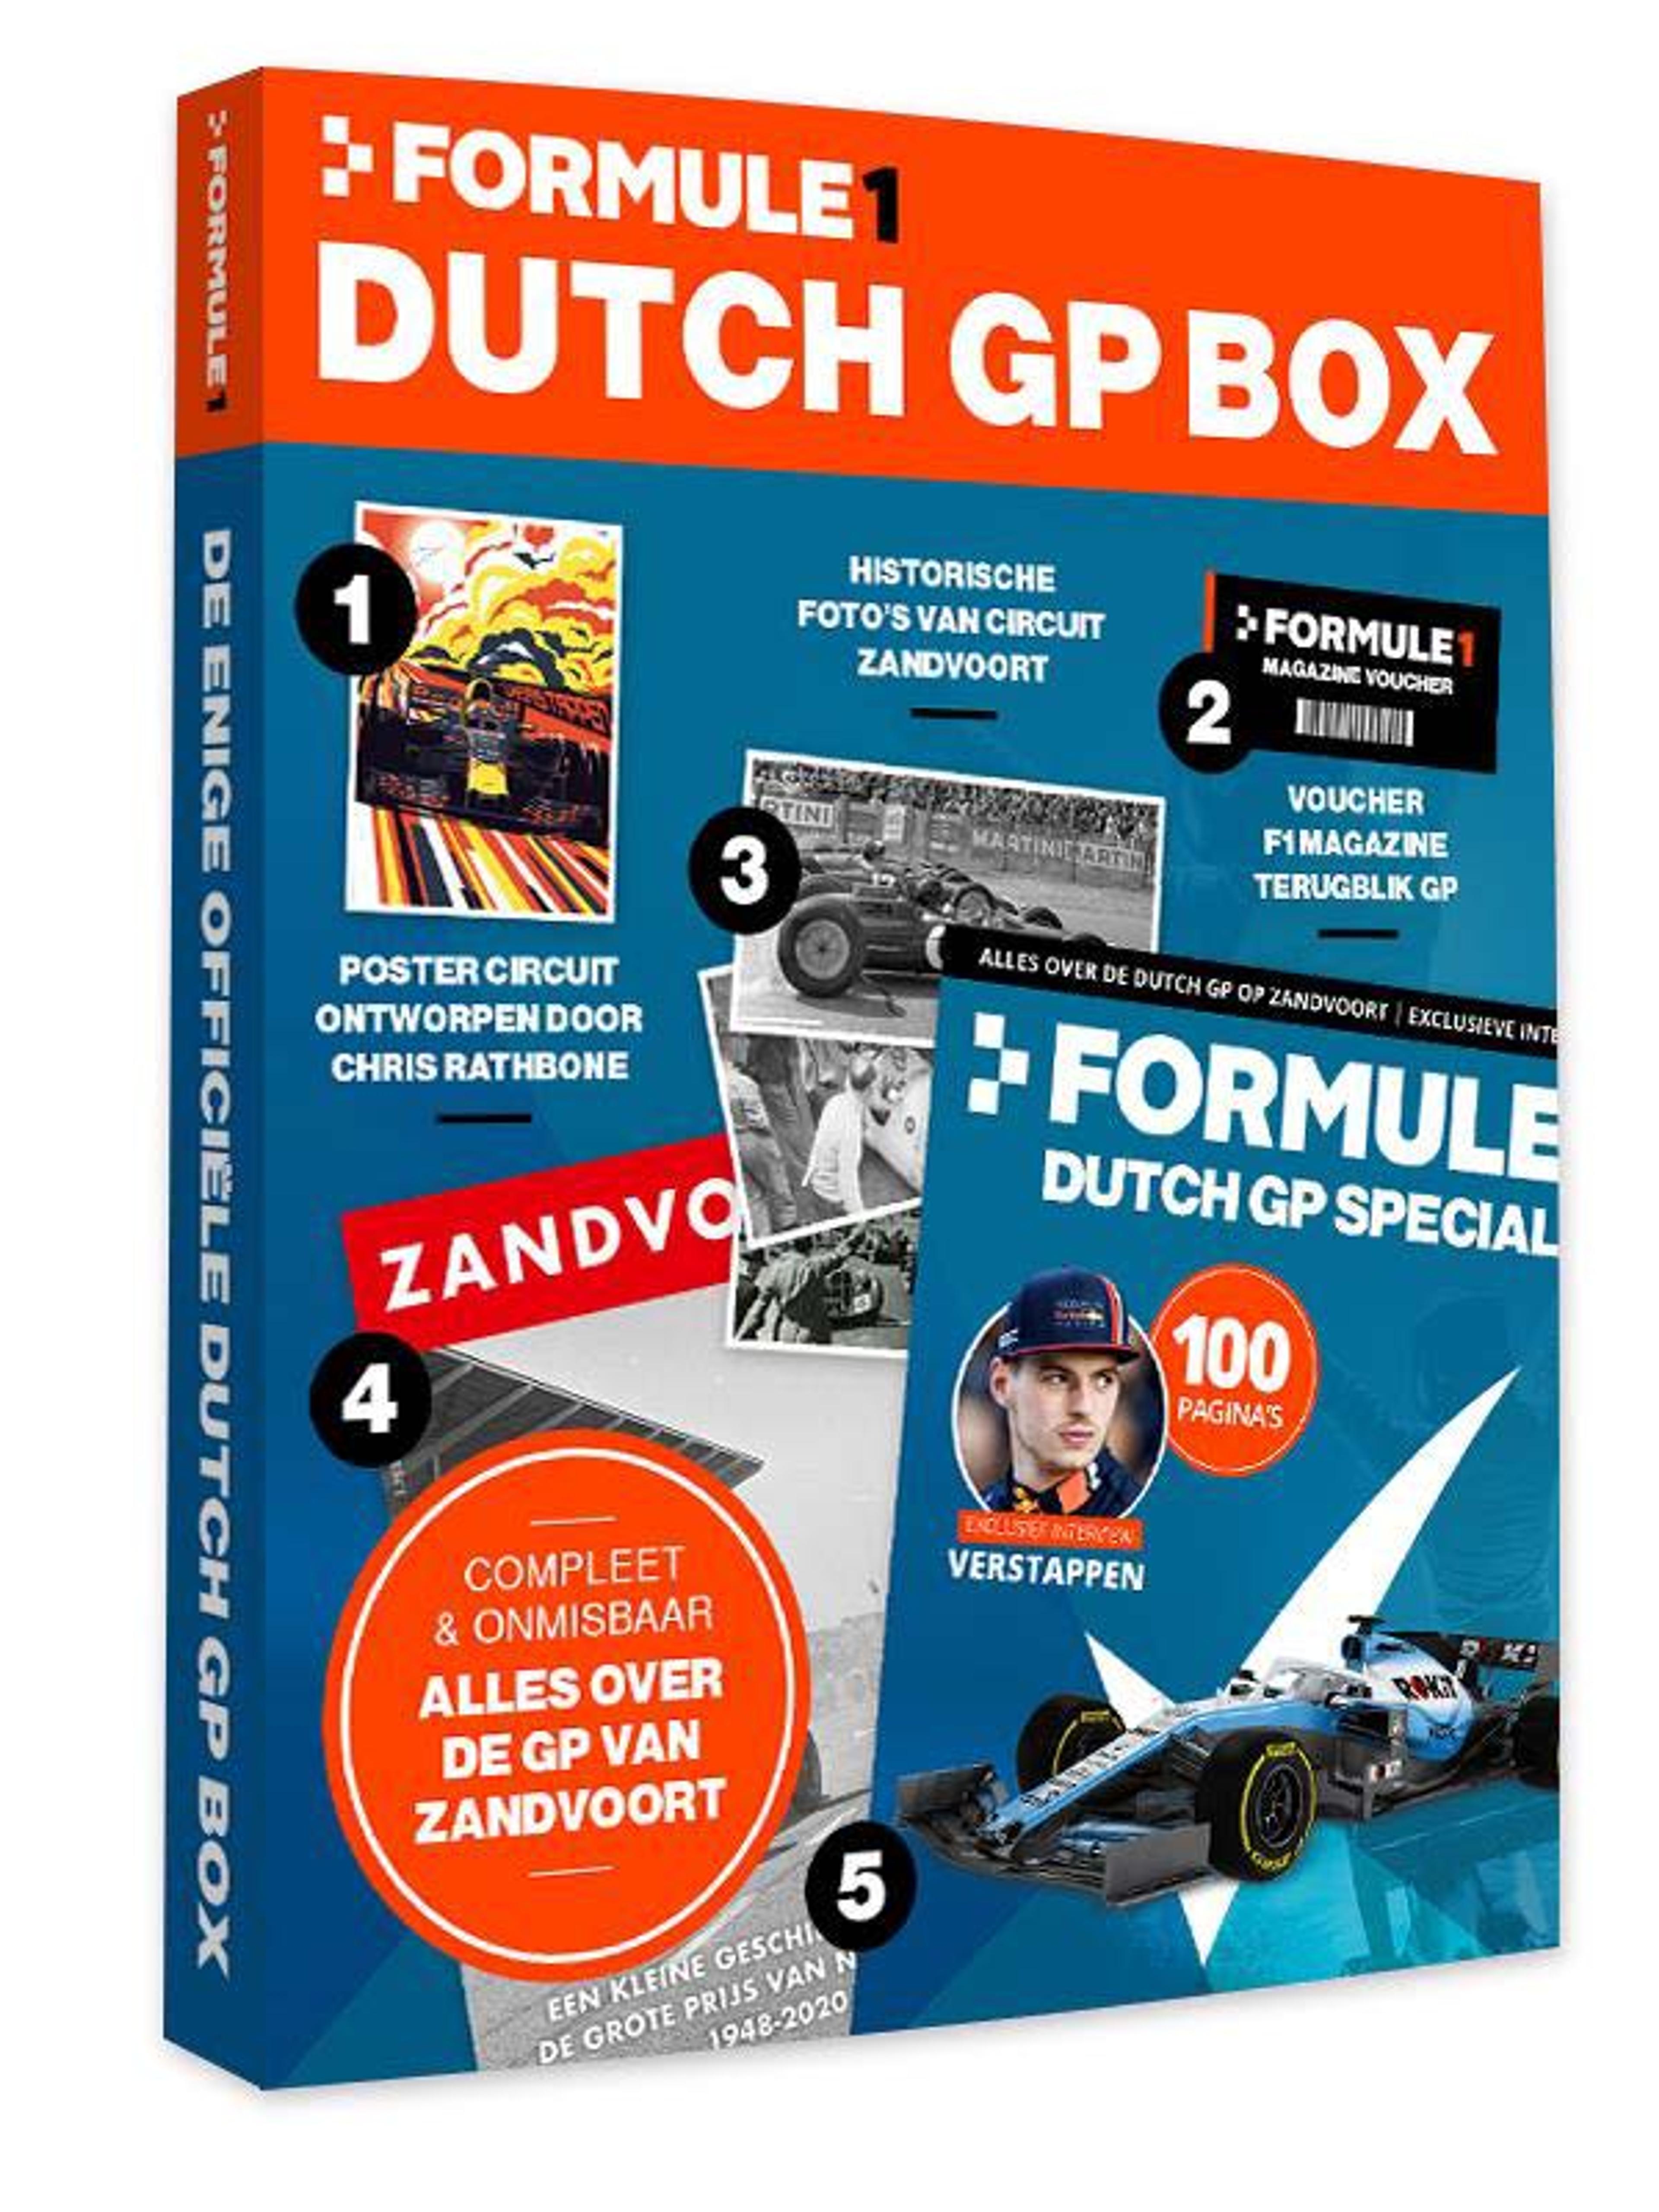 Dutch GP Box